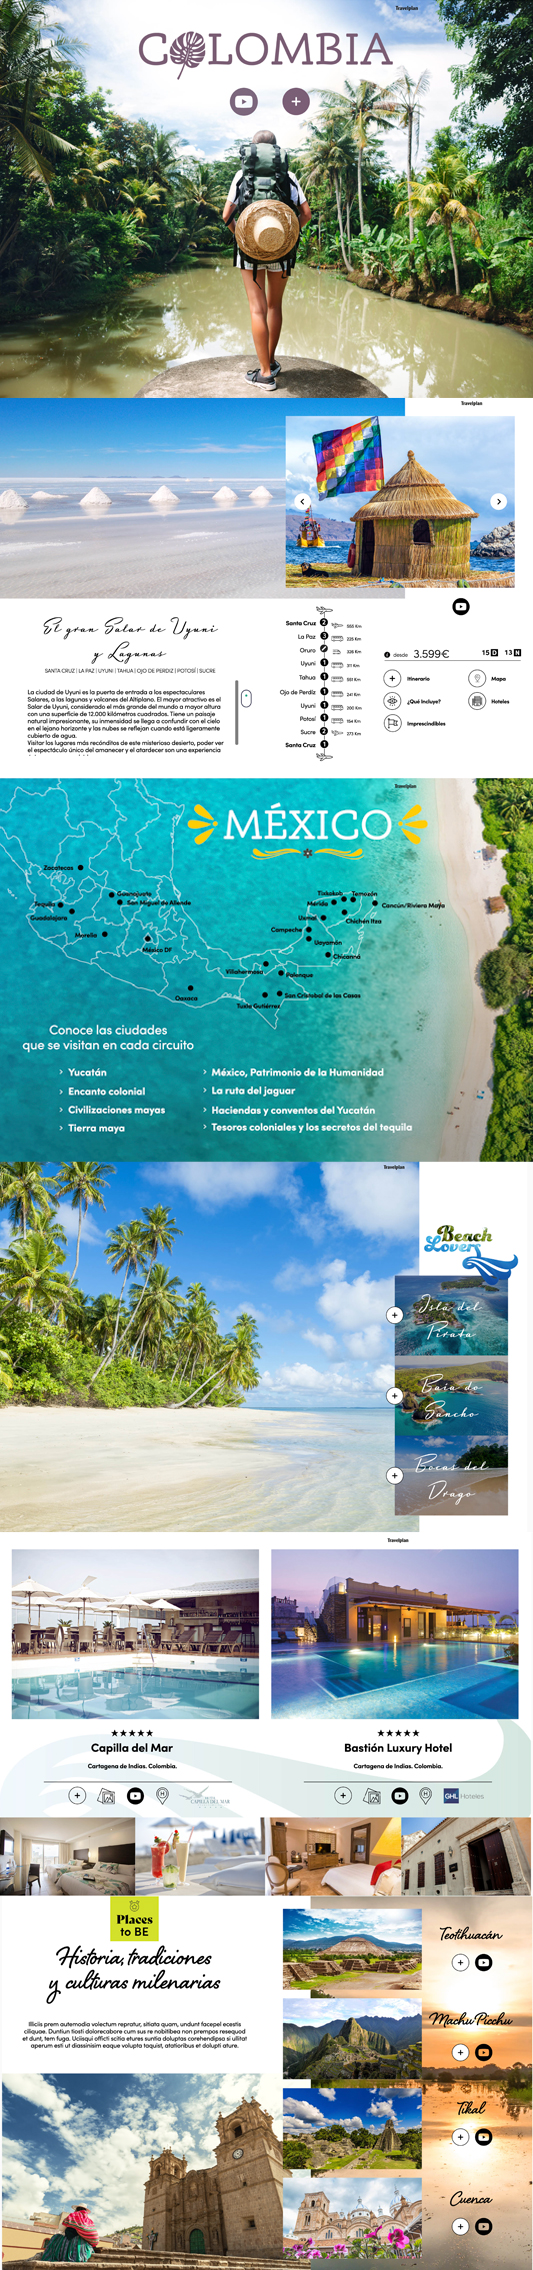 eMagazine Latinoamérica Travelplan